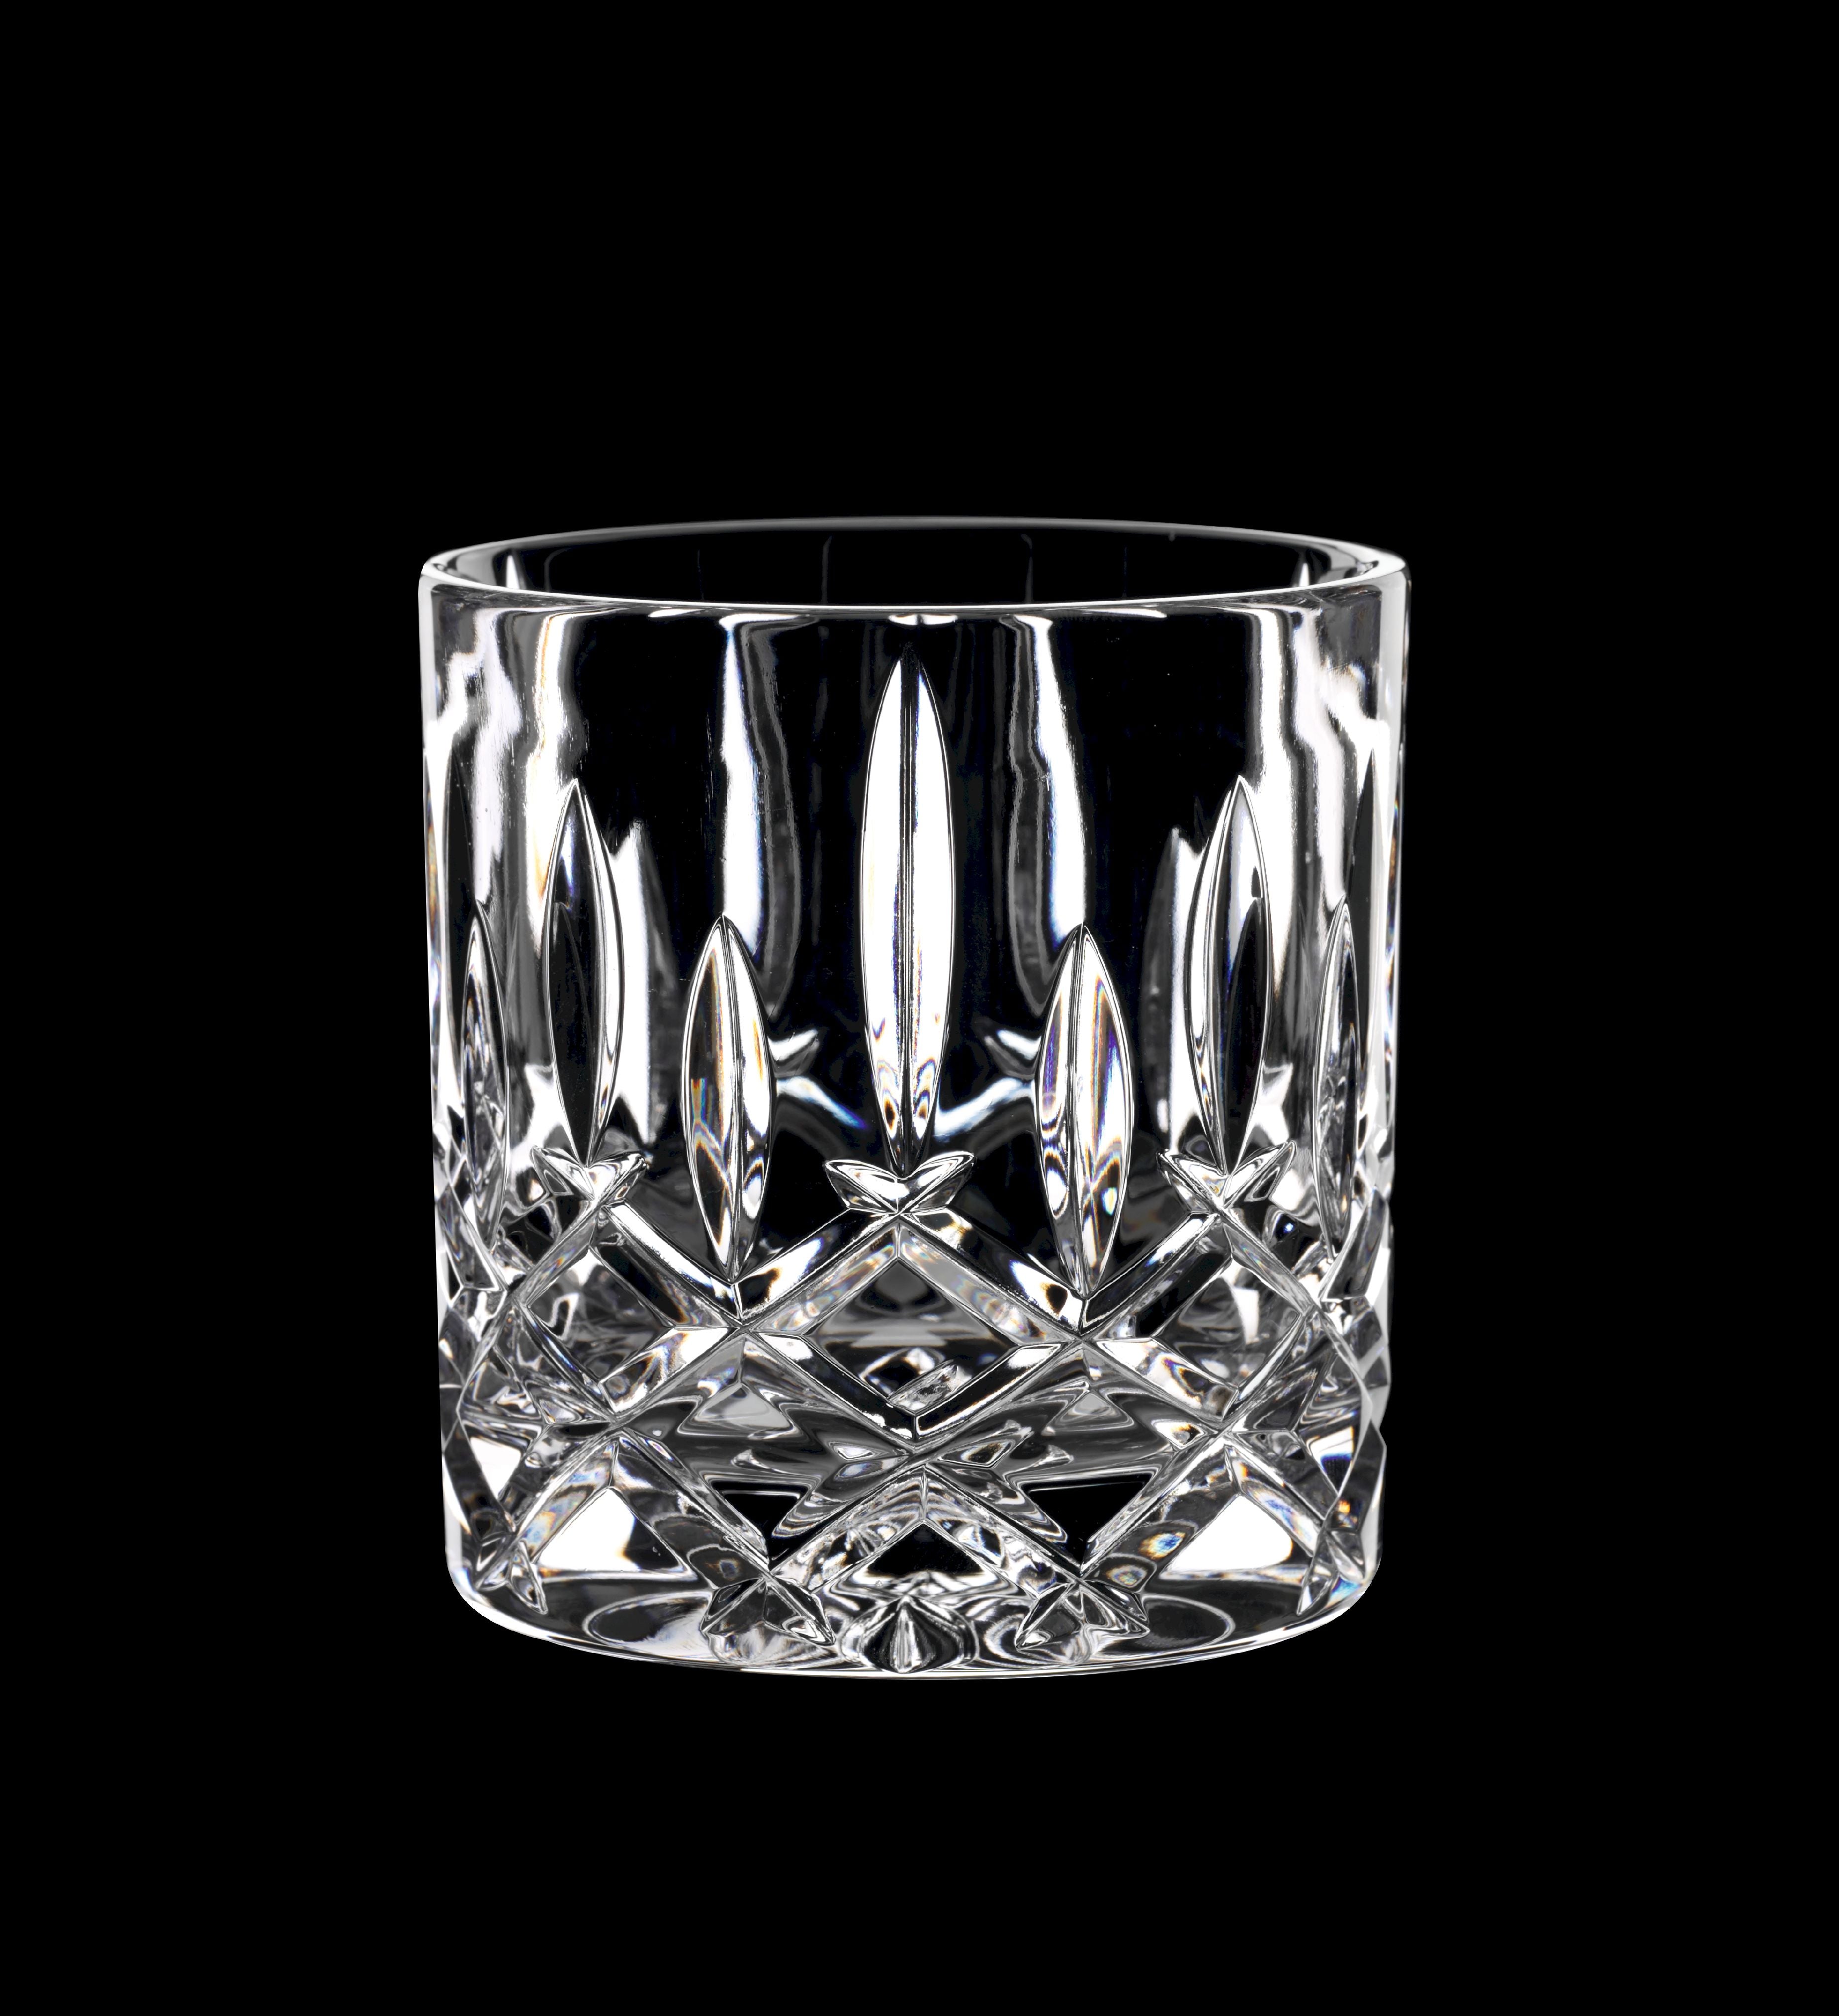 Nachtmann Noblesse SOF Glass 245 ml, conjunto de 4